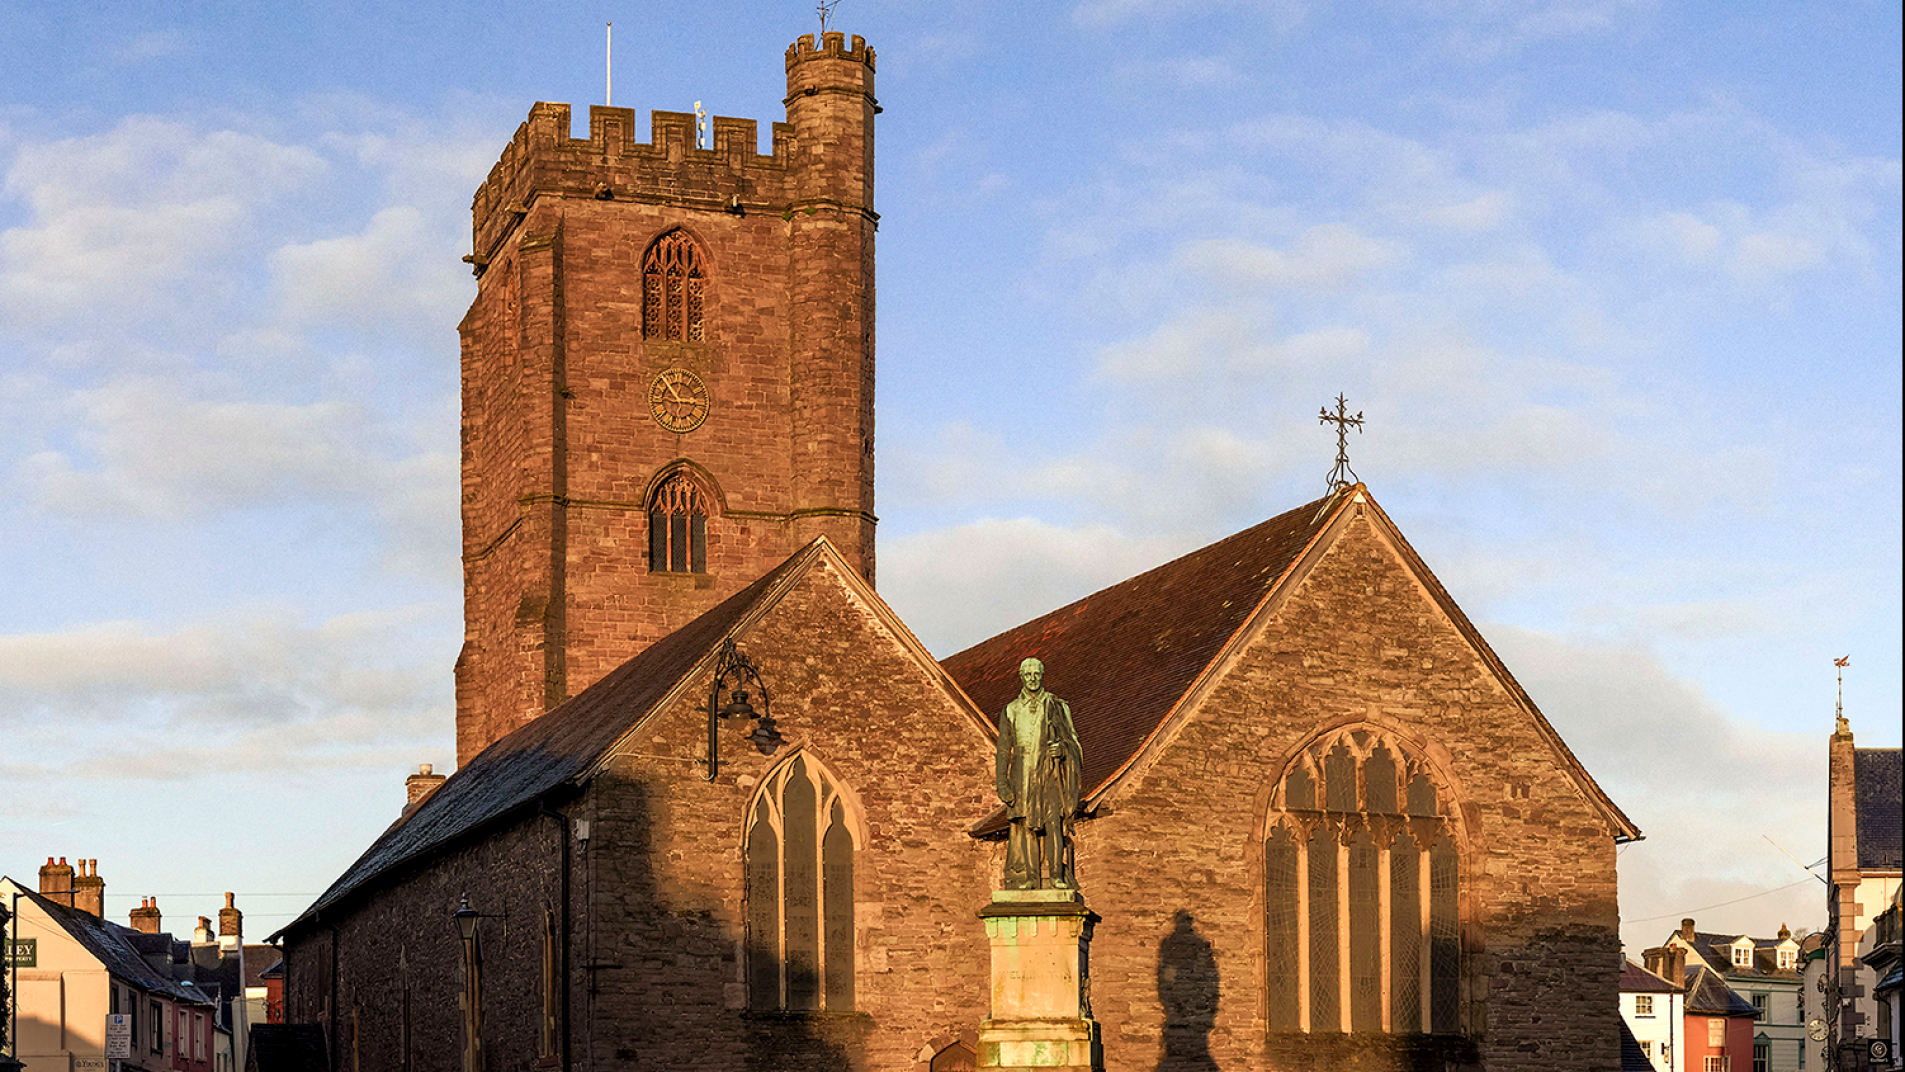 A image of church in Brecon town centre